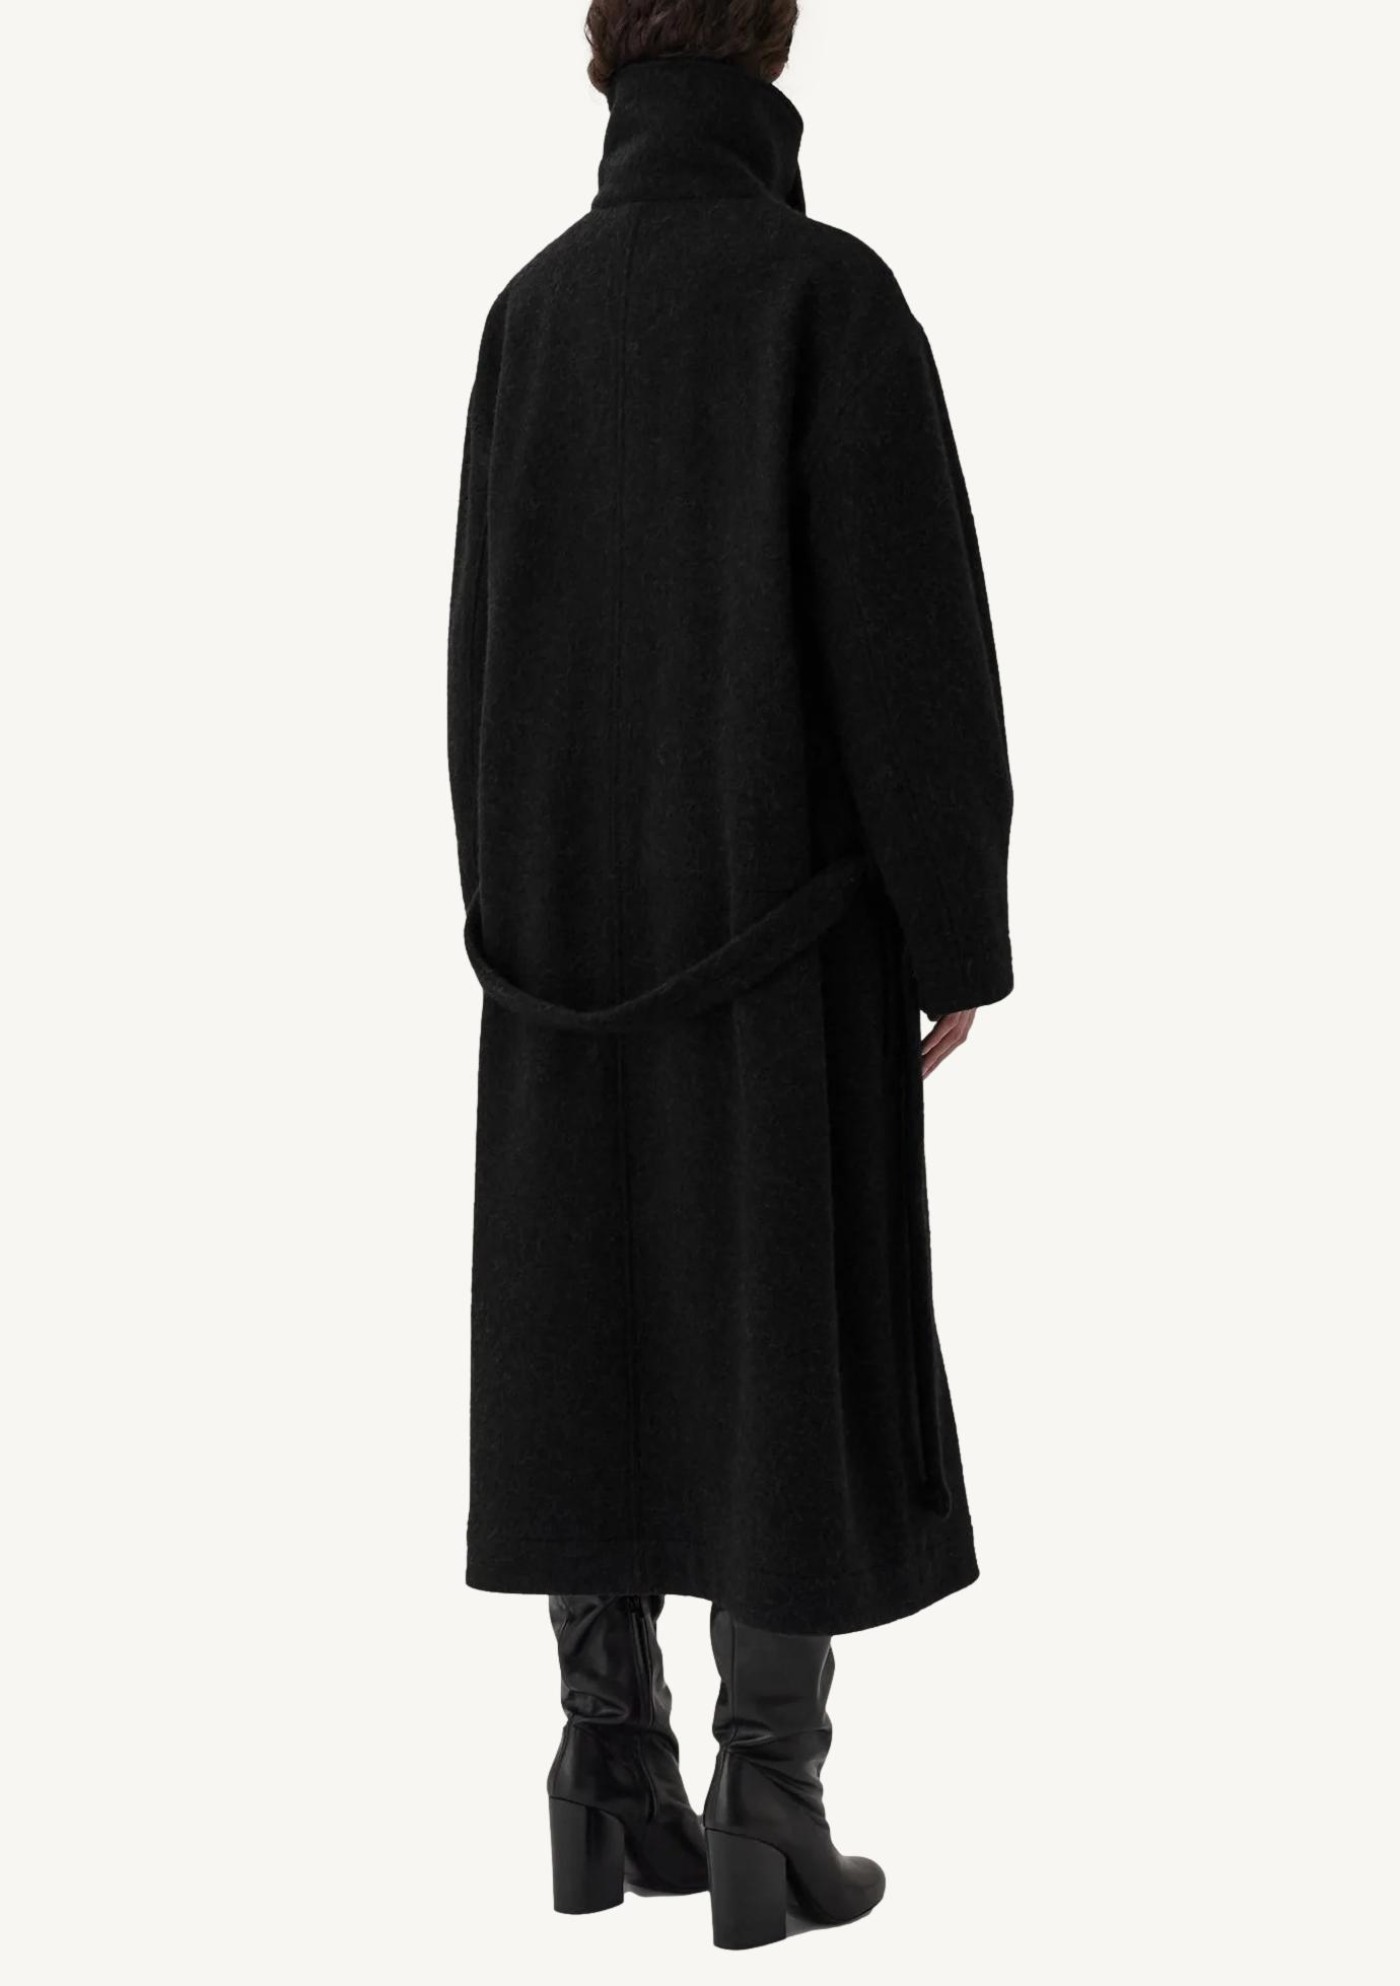 Black alpaca wool bathrobe